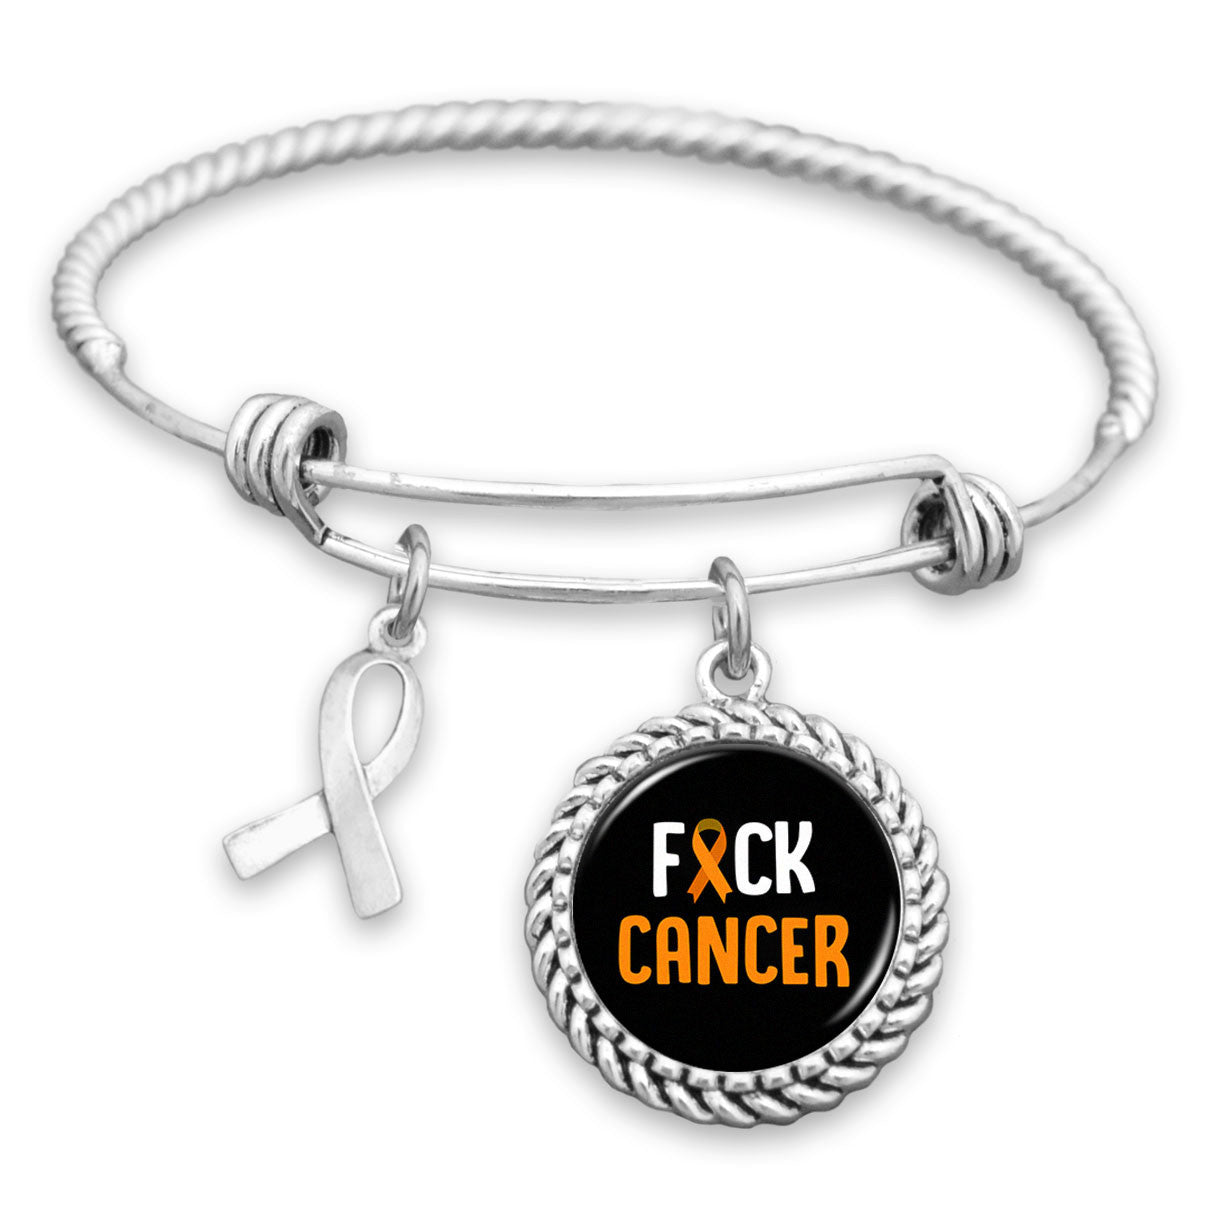 F*ck Cancer Leukemia Charm Bracelet